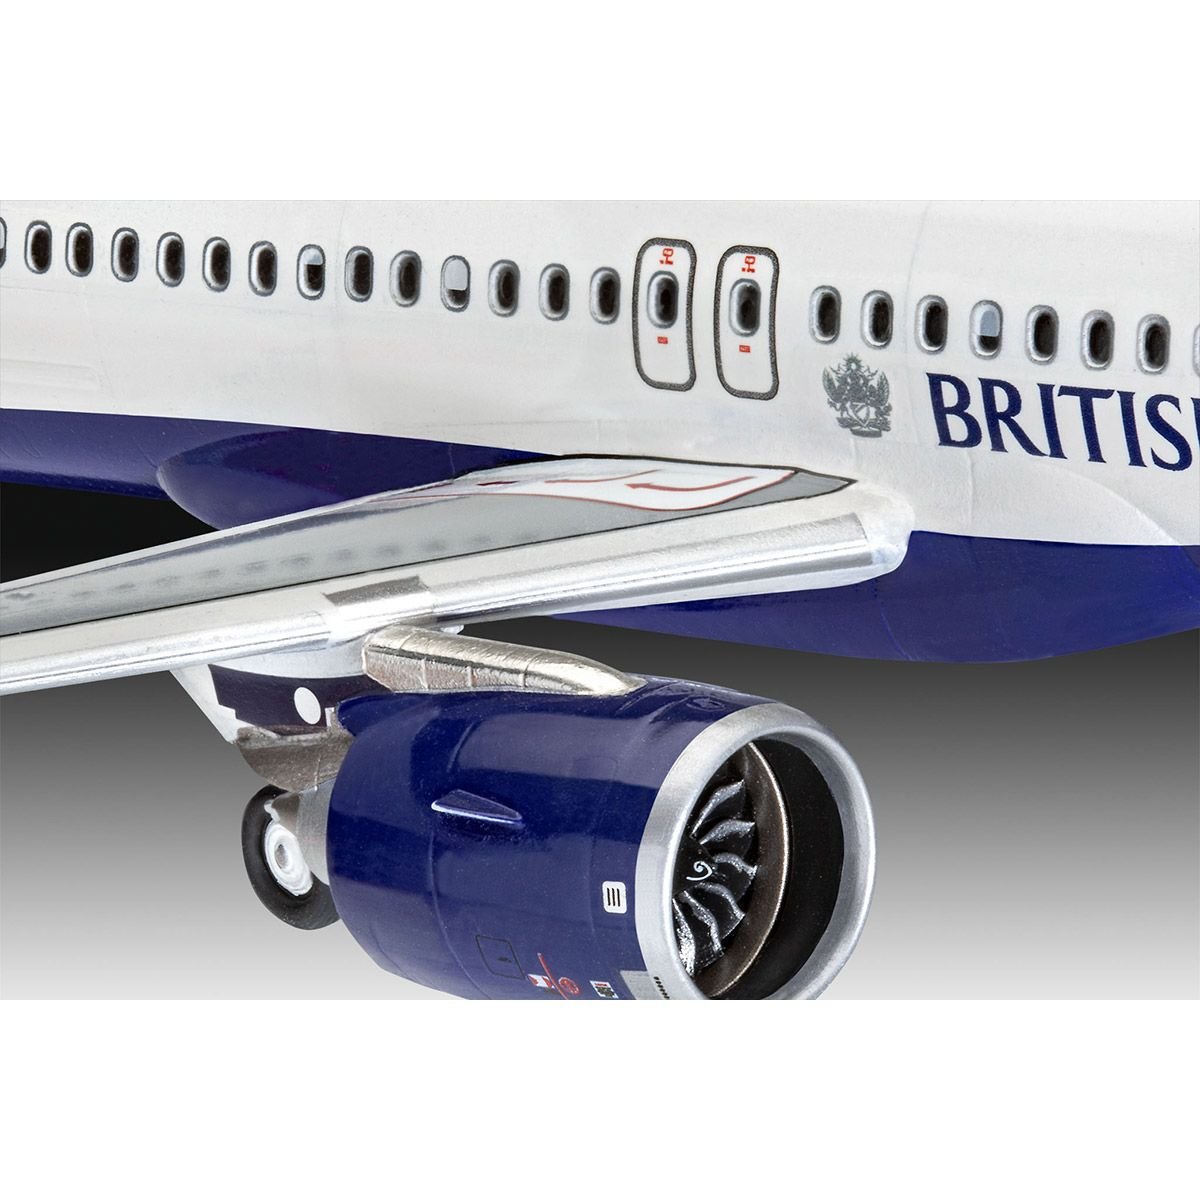 Збірна модель літака Revell Набір Airbus A320neo British Airways, рівень, 4 масштаб 1:144, 66 деталей (RVL-63840) - фото 3